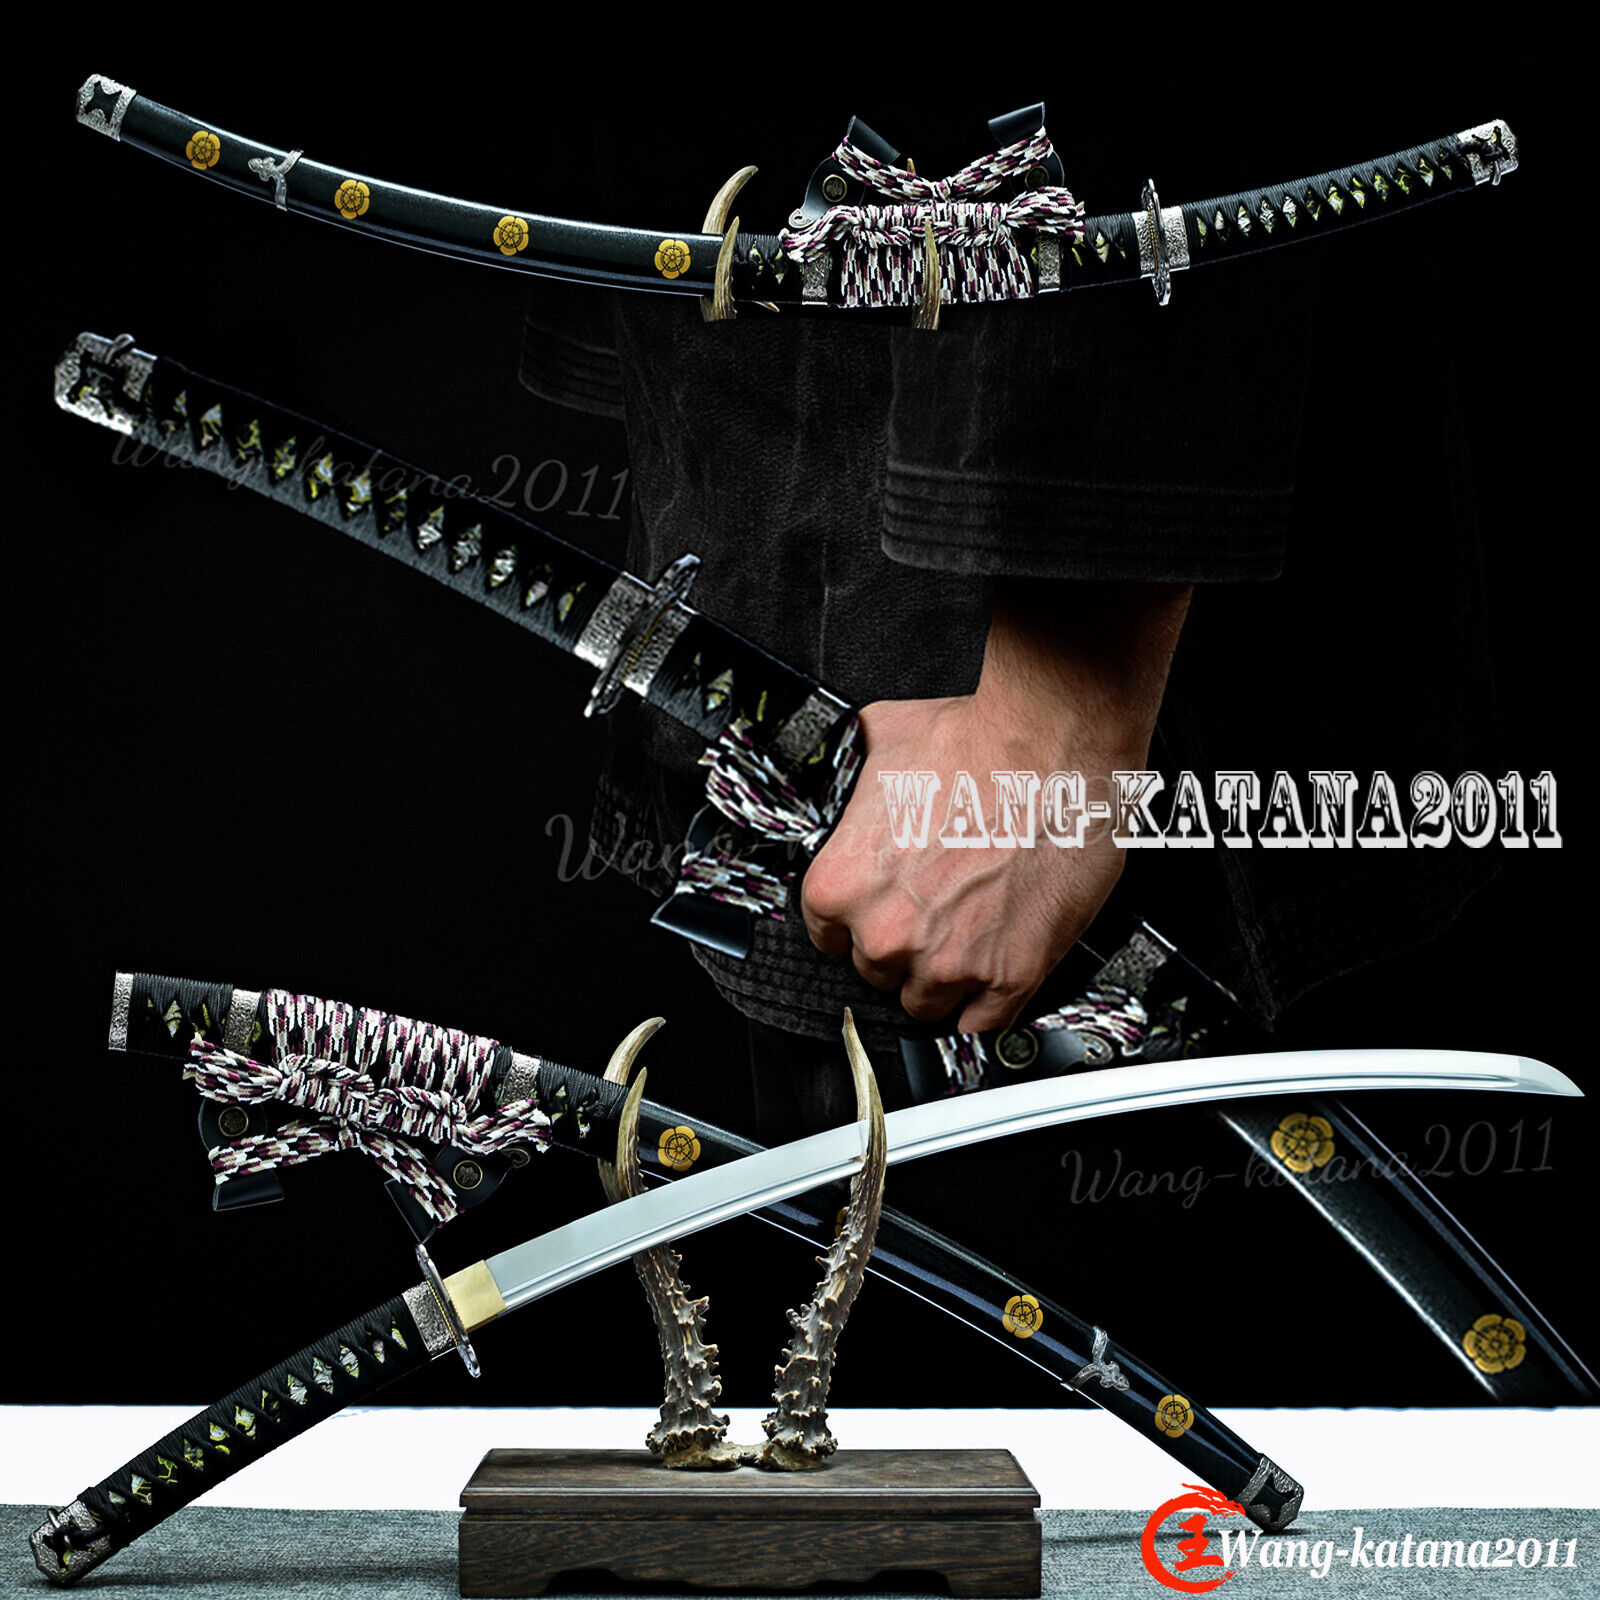 Real Tachi T10 Battle Ready Sharp Katana Large Radian Japanese Samurai Sword